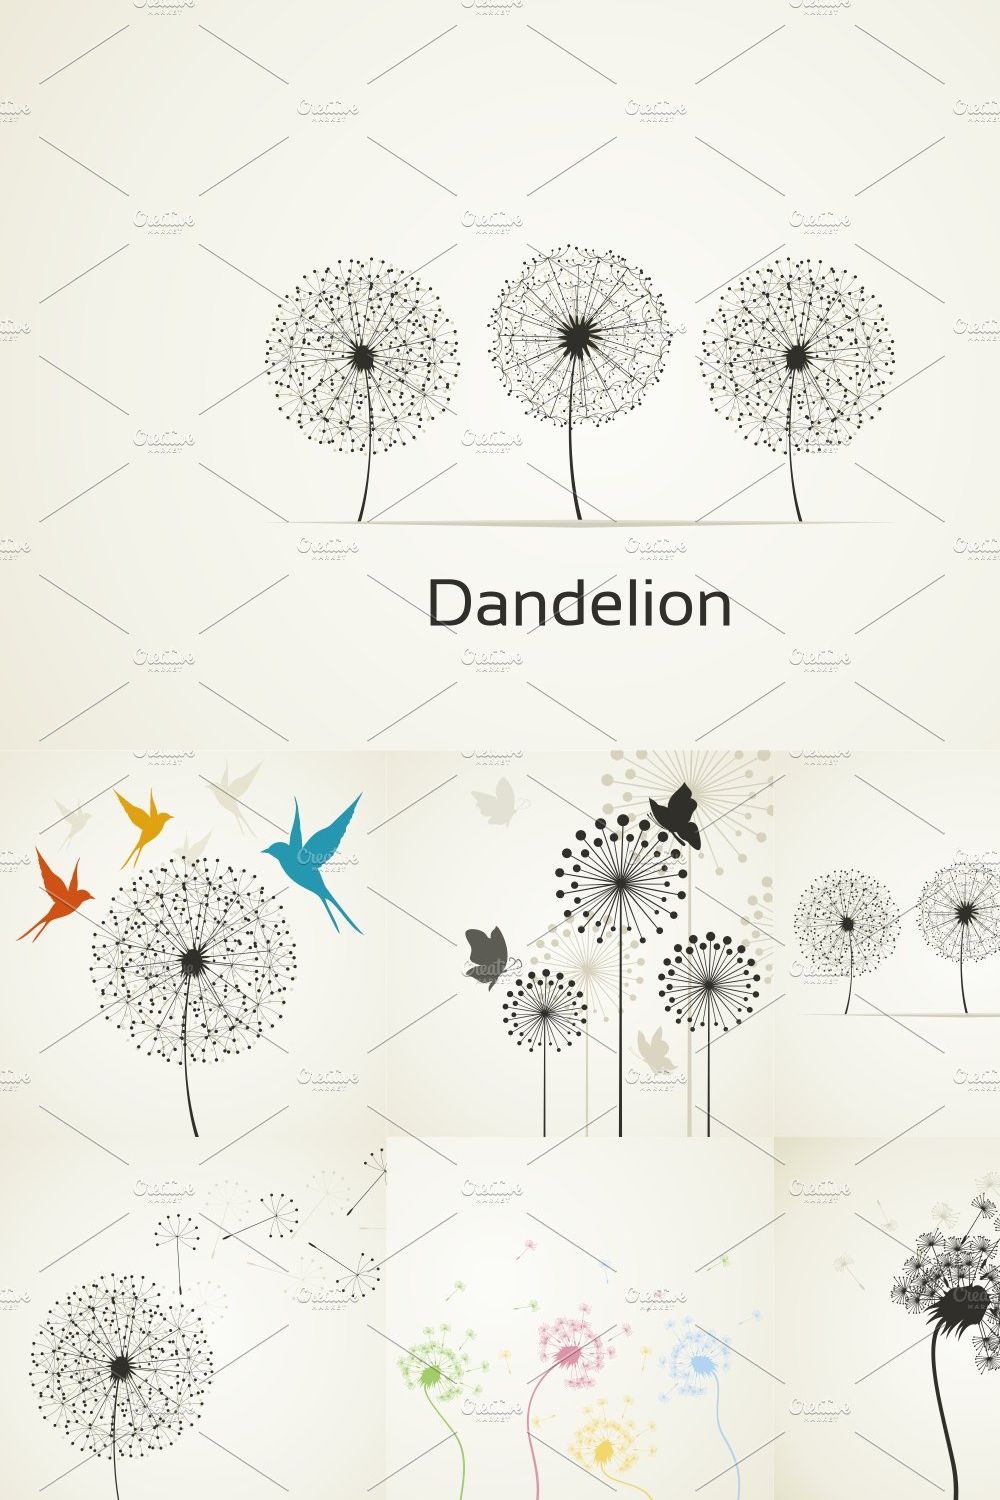 Dandelion pinterest preview image.